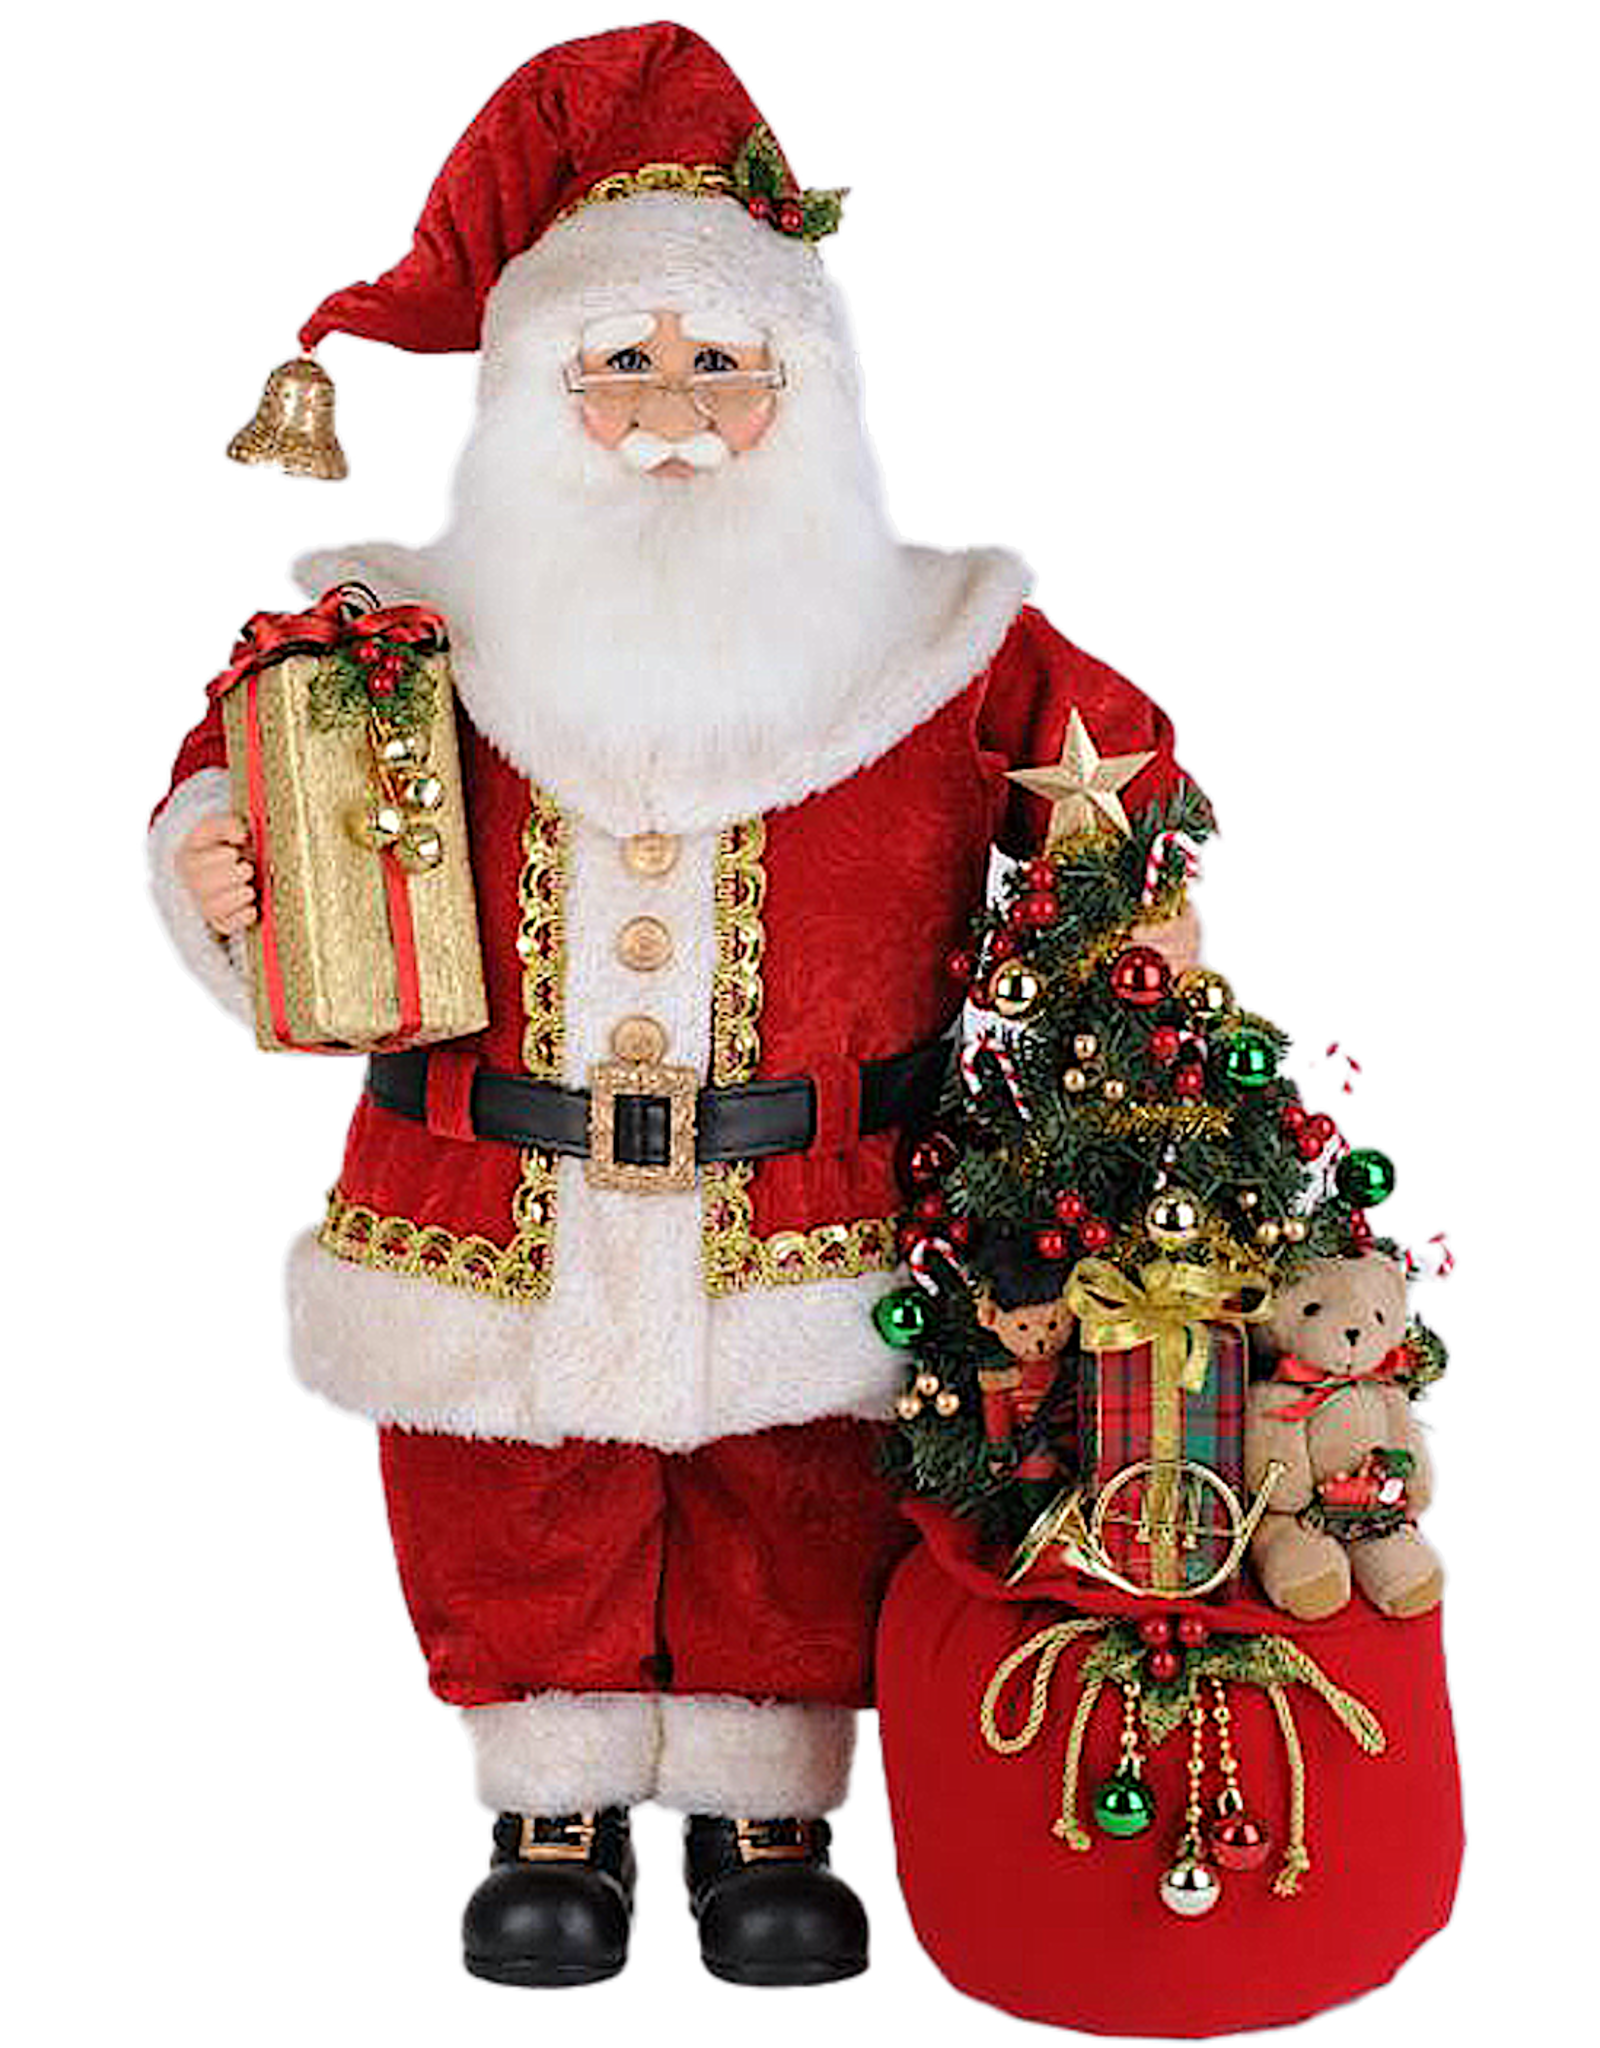 Karen Didion Lighted Christmas Spirits Santa Figure 30 Inches